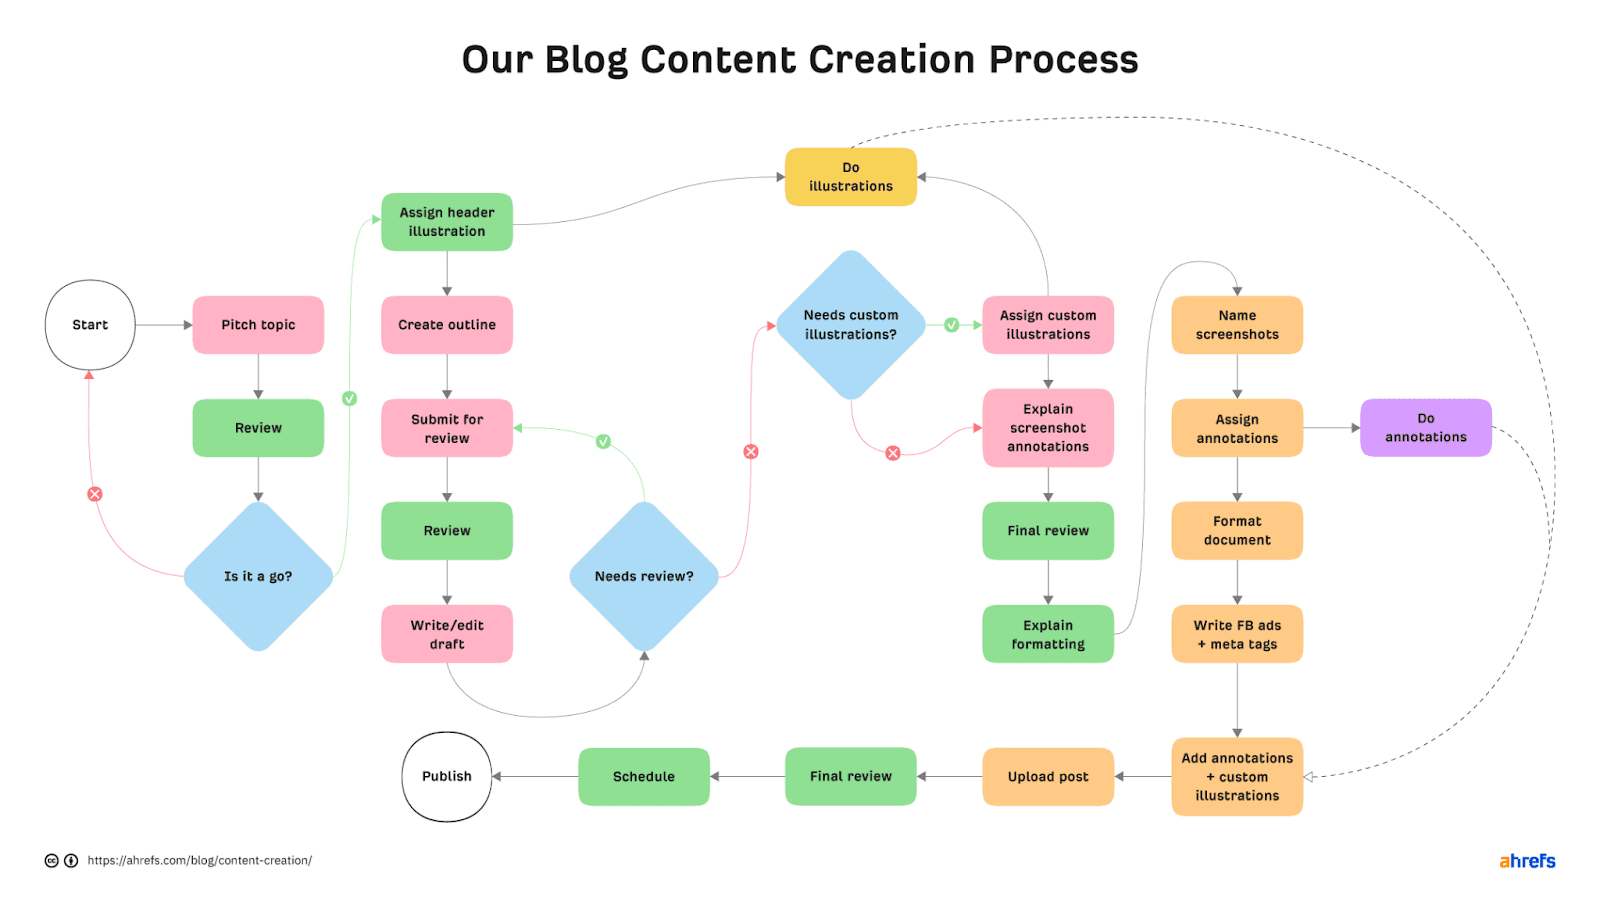 Flowchart of Ahrefs blog's content creation process 